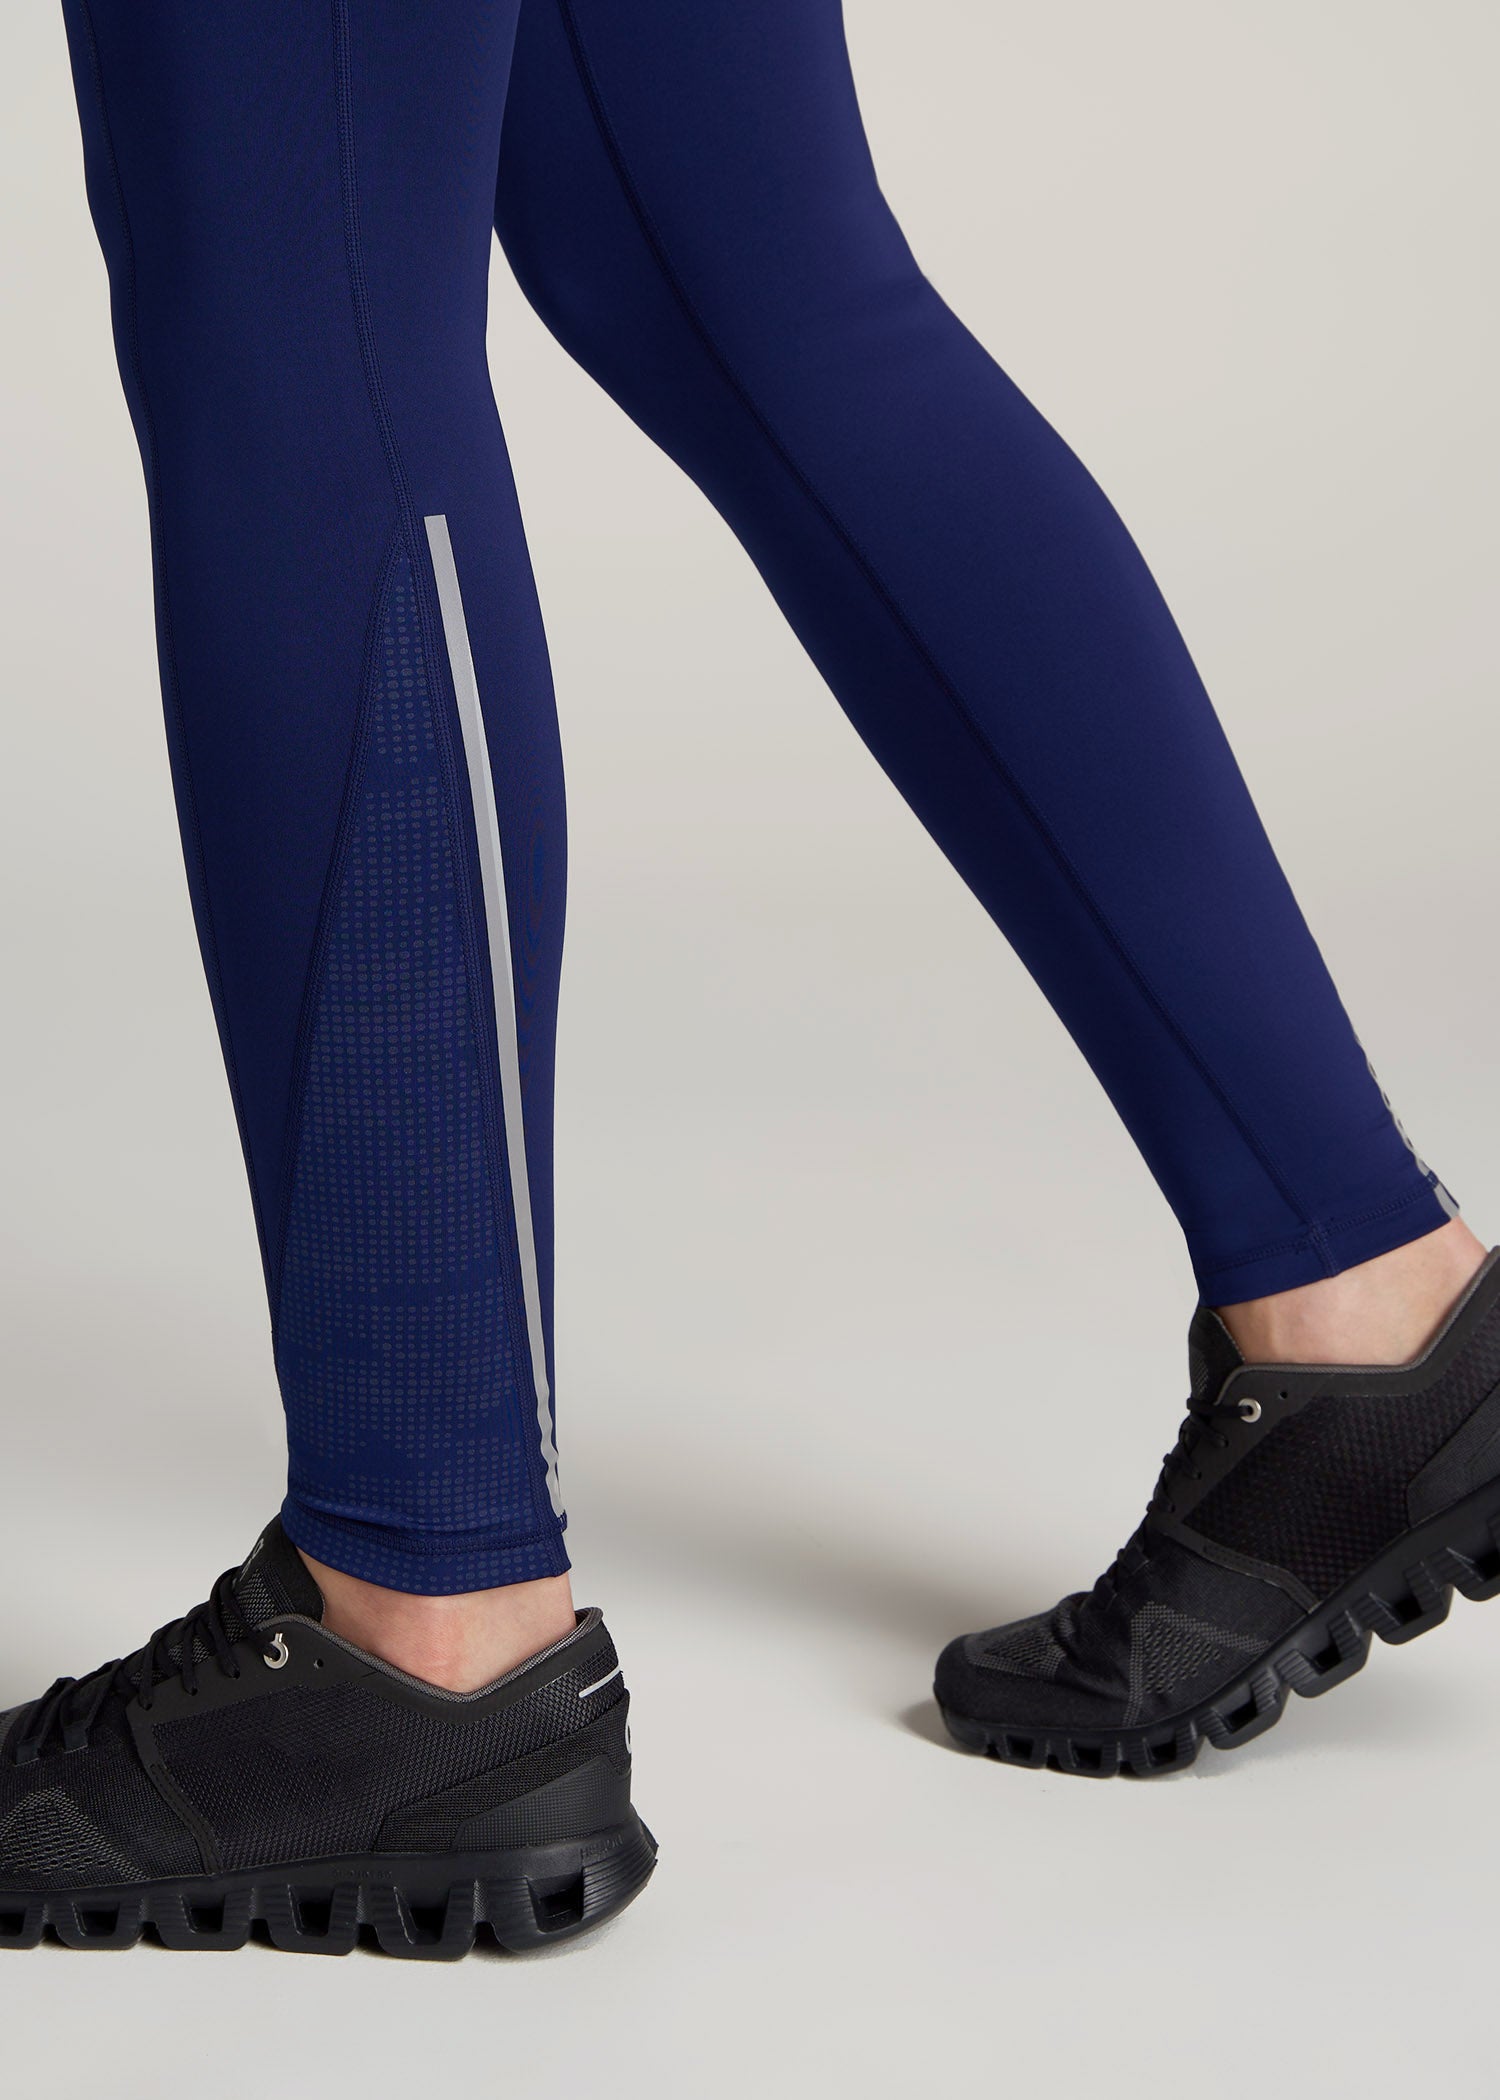 Lululemon Womens 6 Navy Blue With Mesh Athletic Leggings Pants 